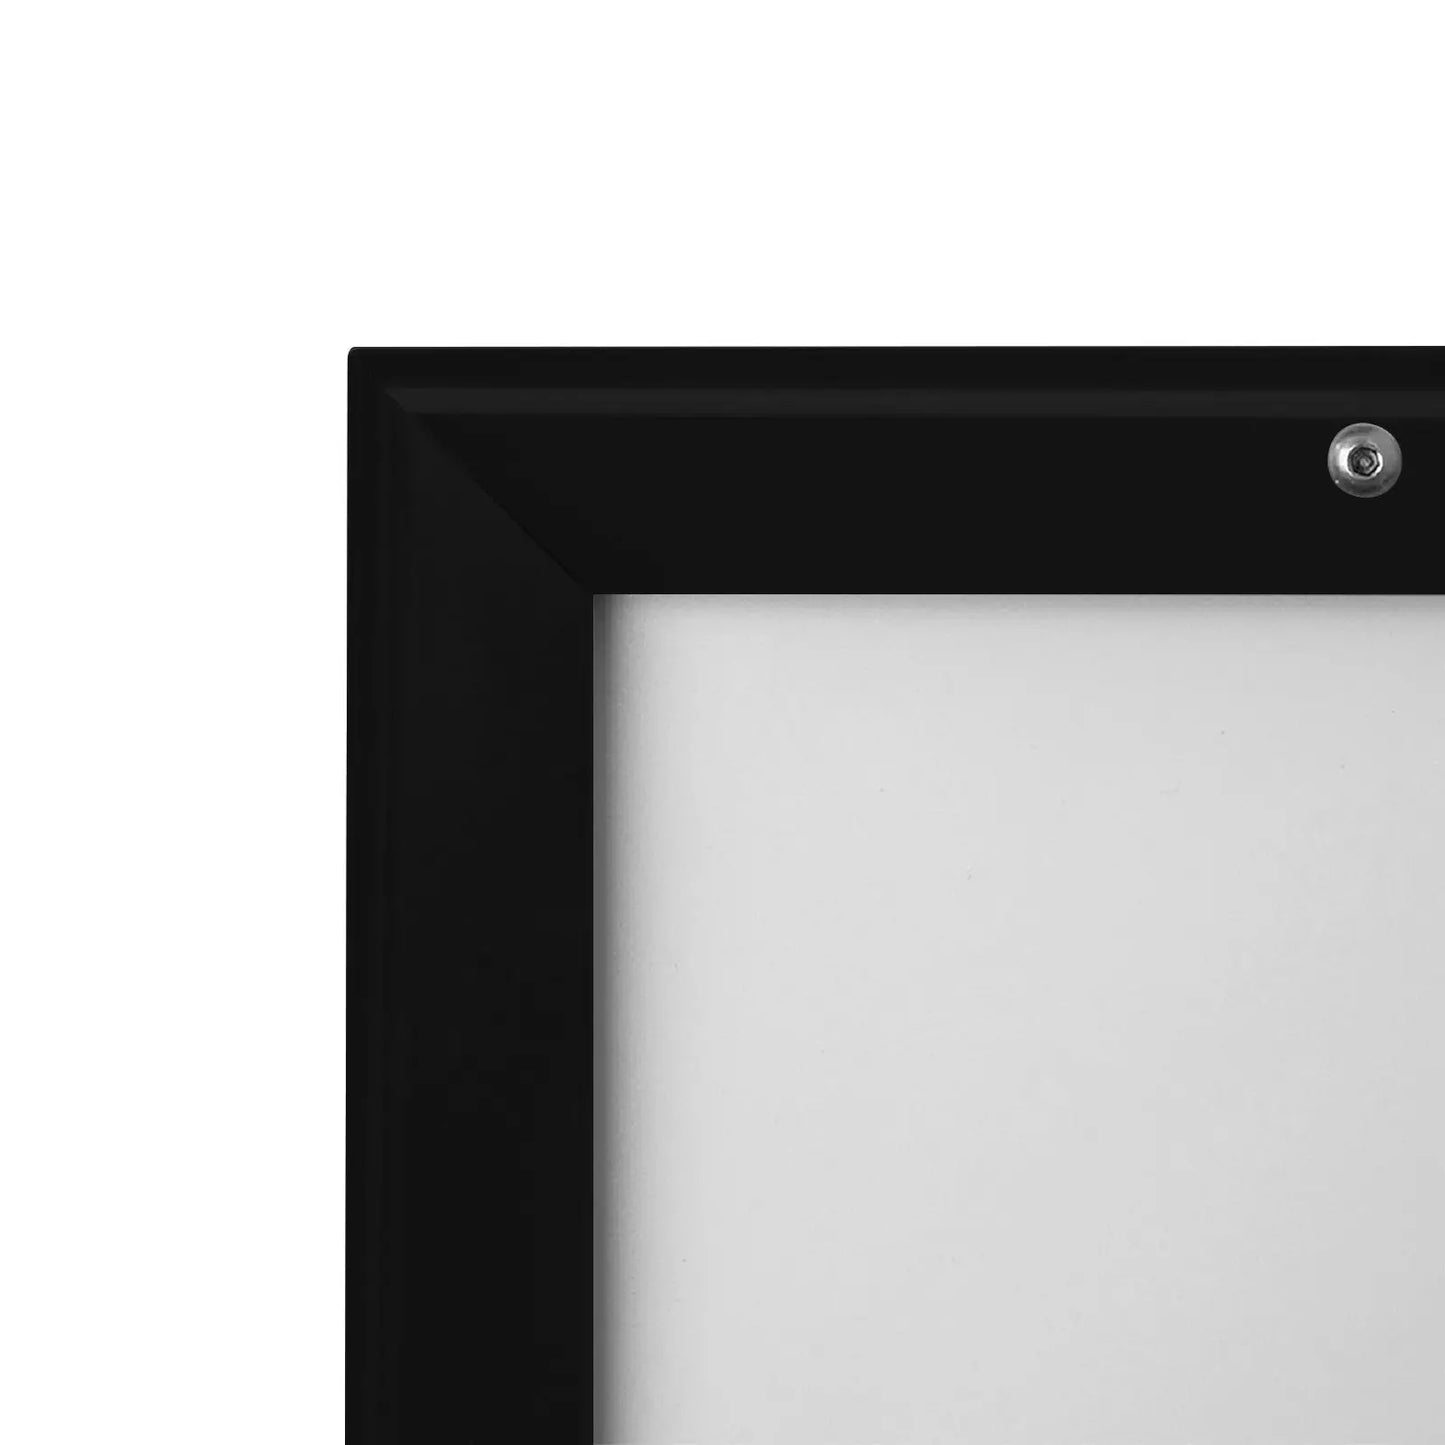 Black locking snap frame poster size 27X40 - 1.25 inch profile - Snap Frames Direct